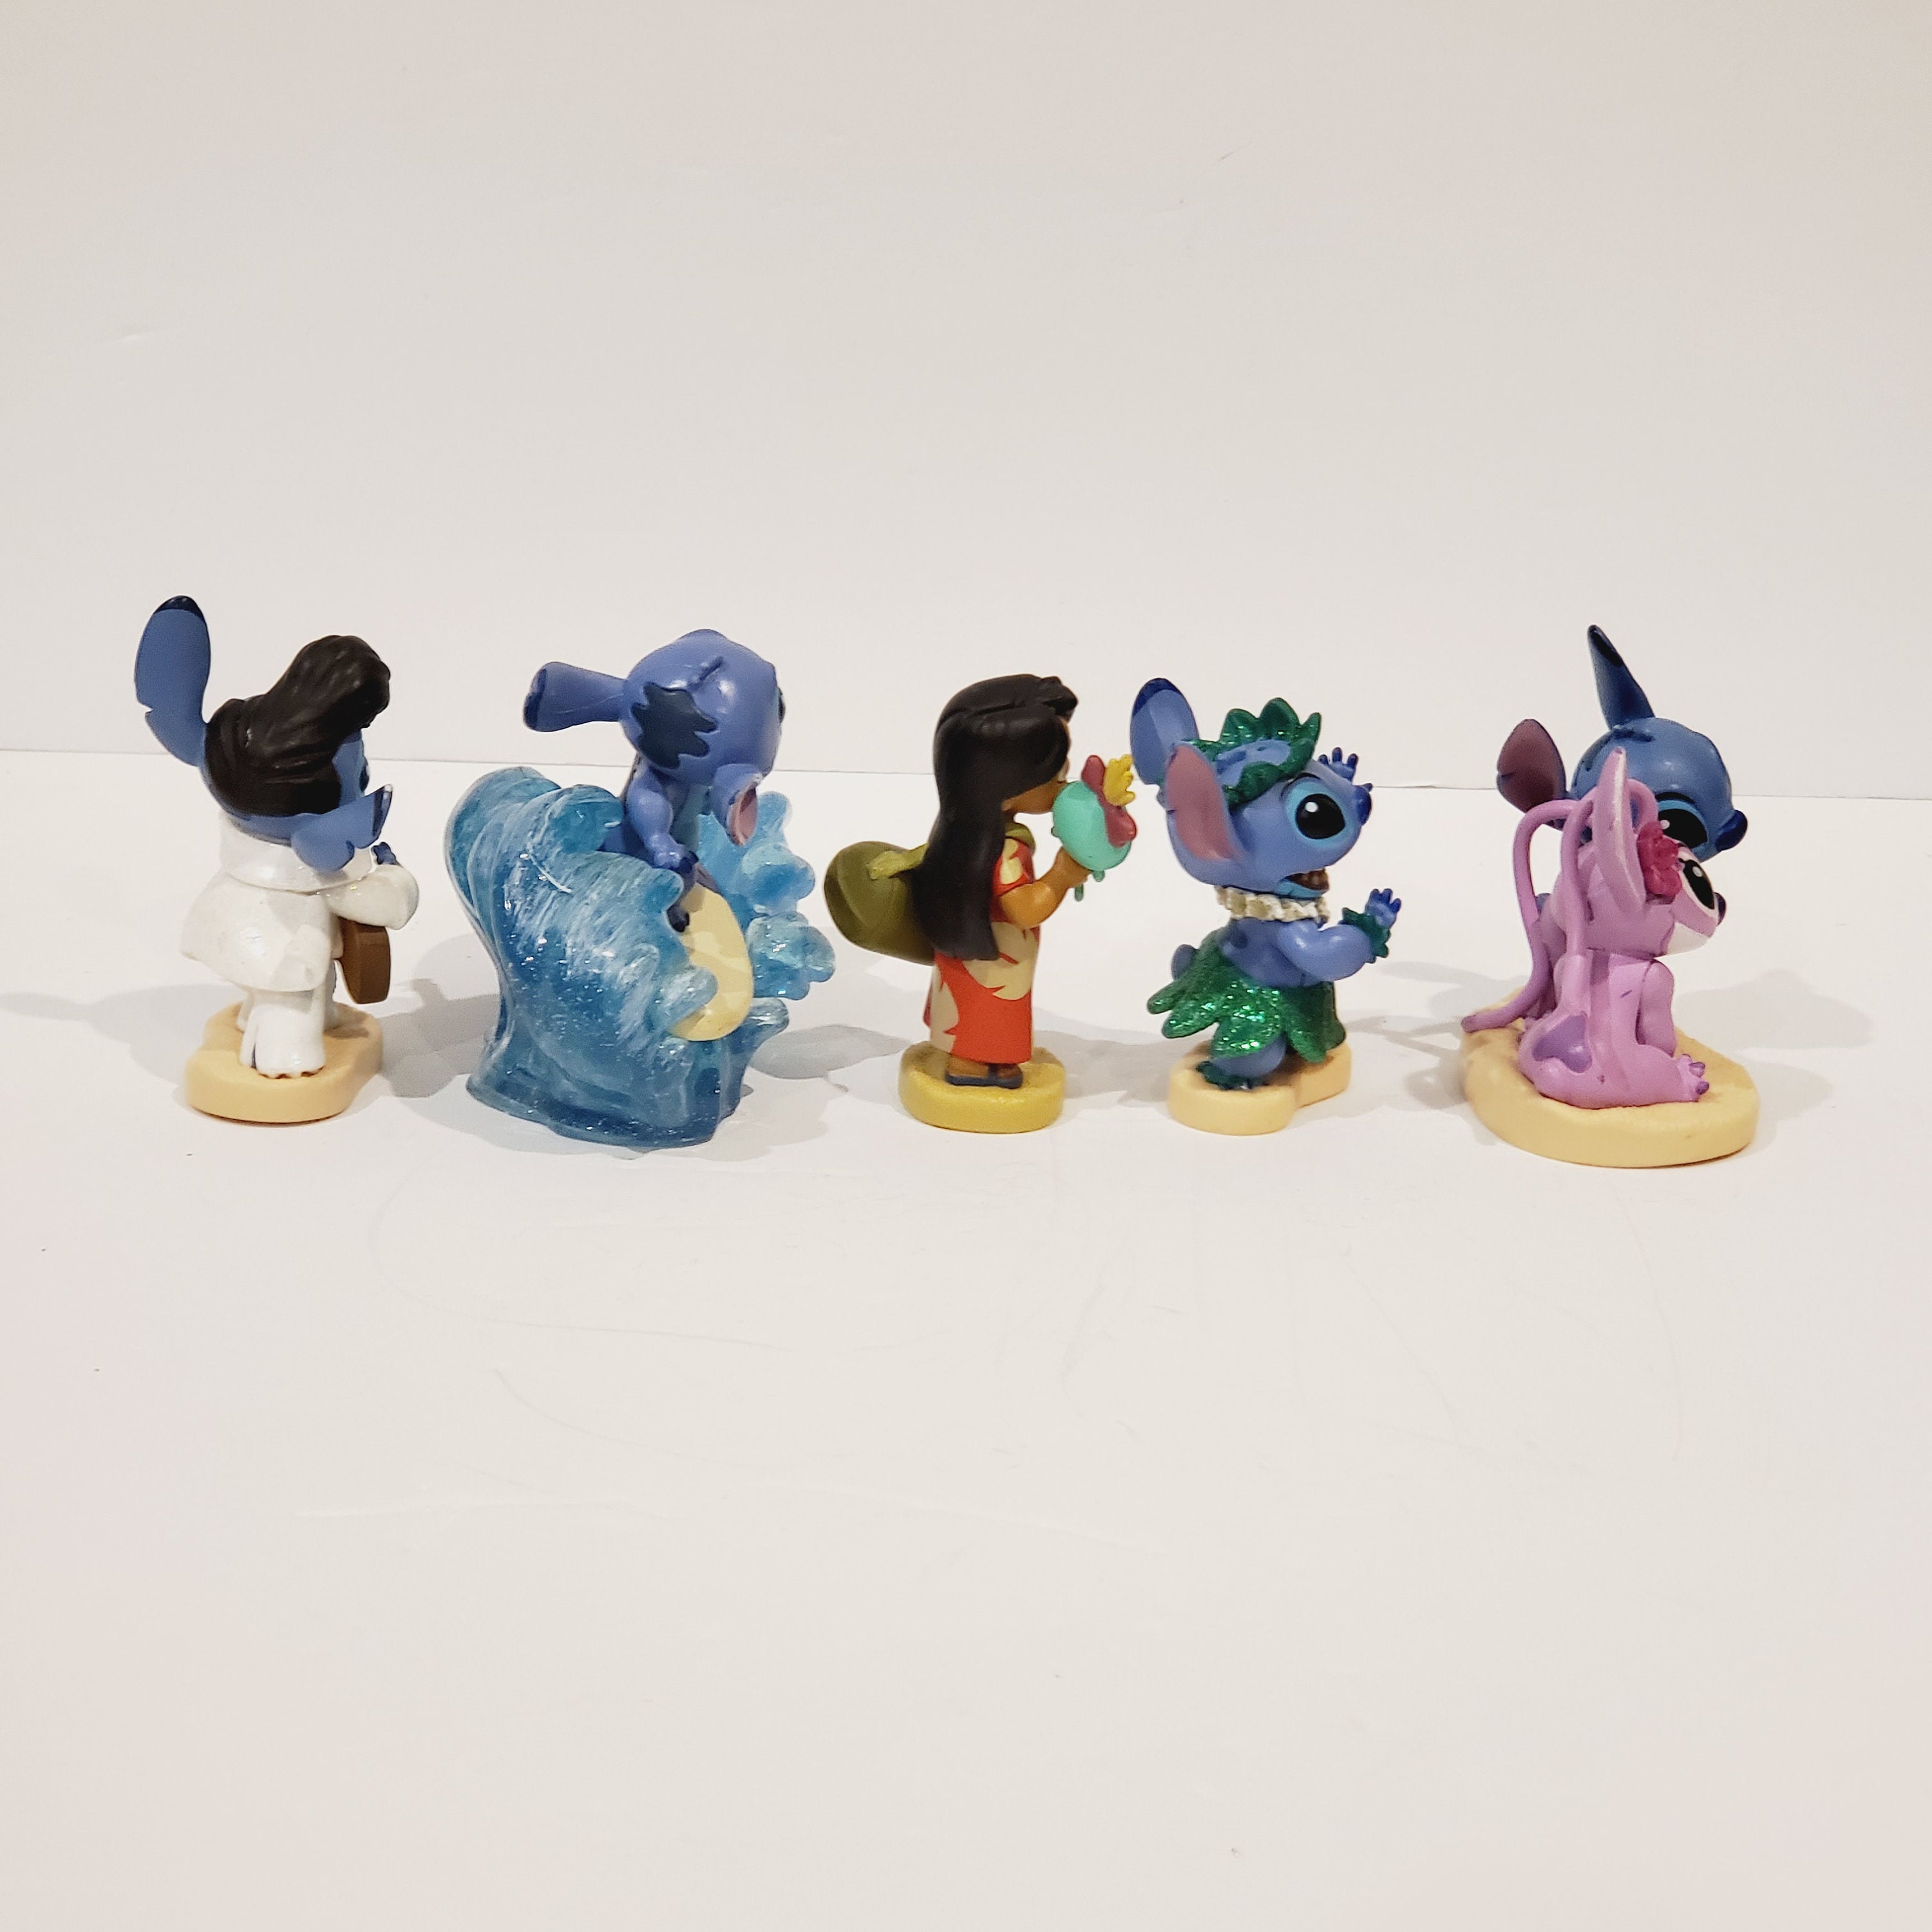 Disney Lilo & Stitch Action Figure Disney Store 